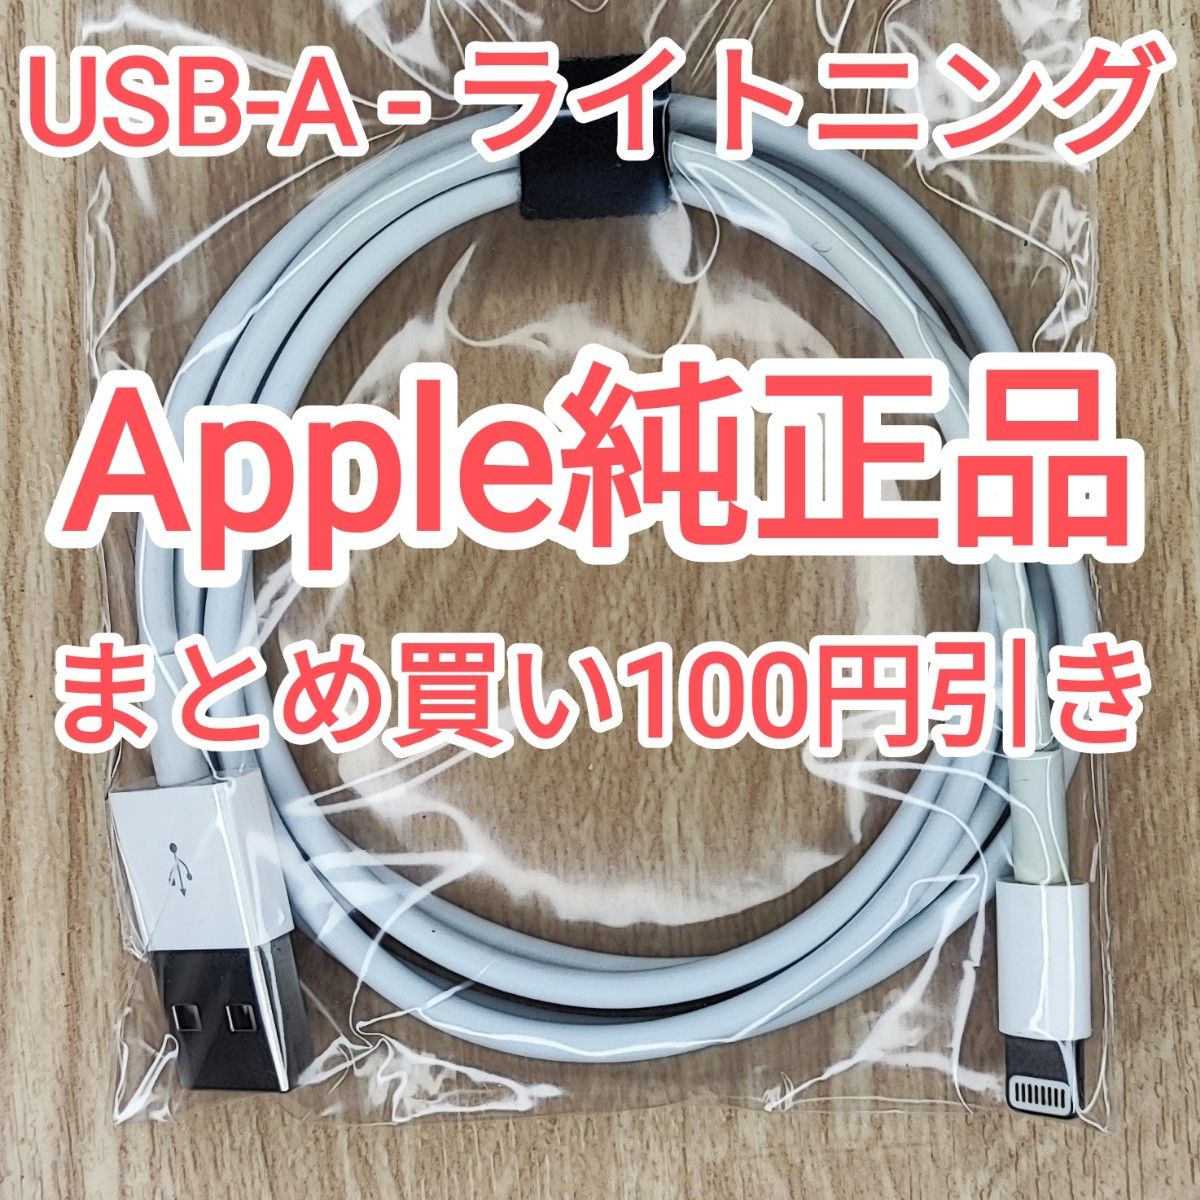 18　apple純正 ライトニングケーブル iPhone iPod touch 純正品付属品正規品